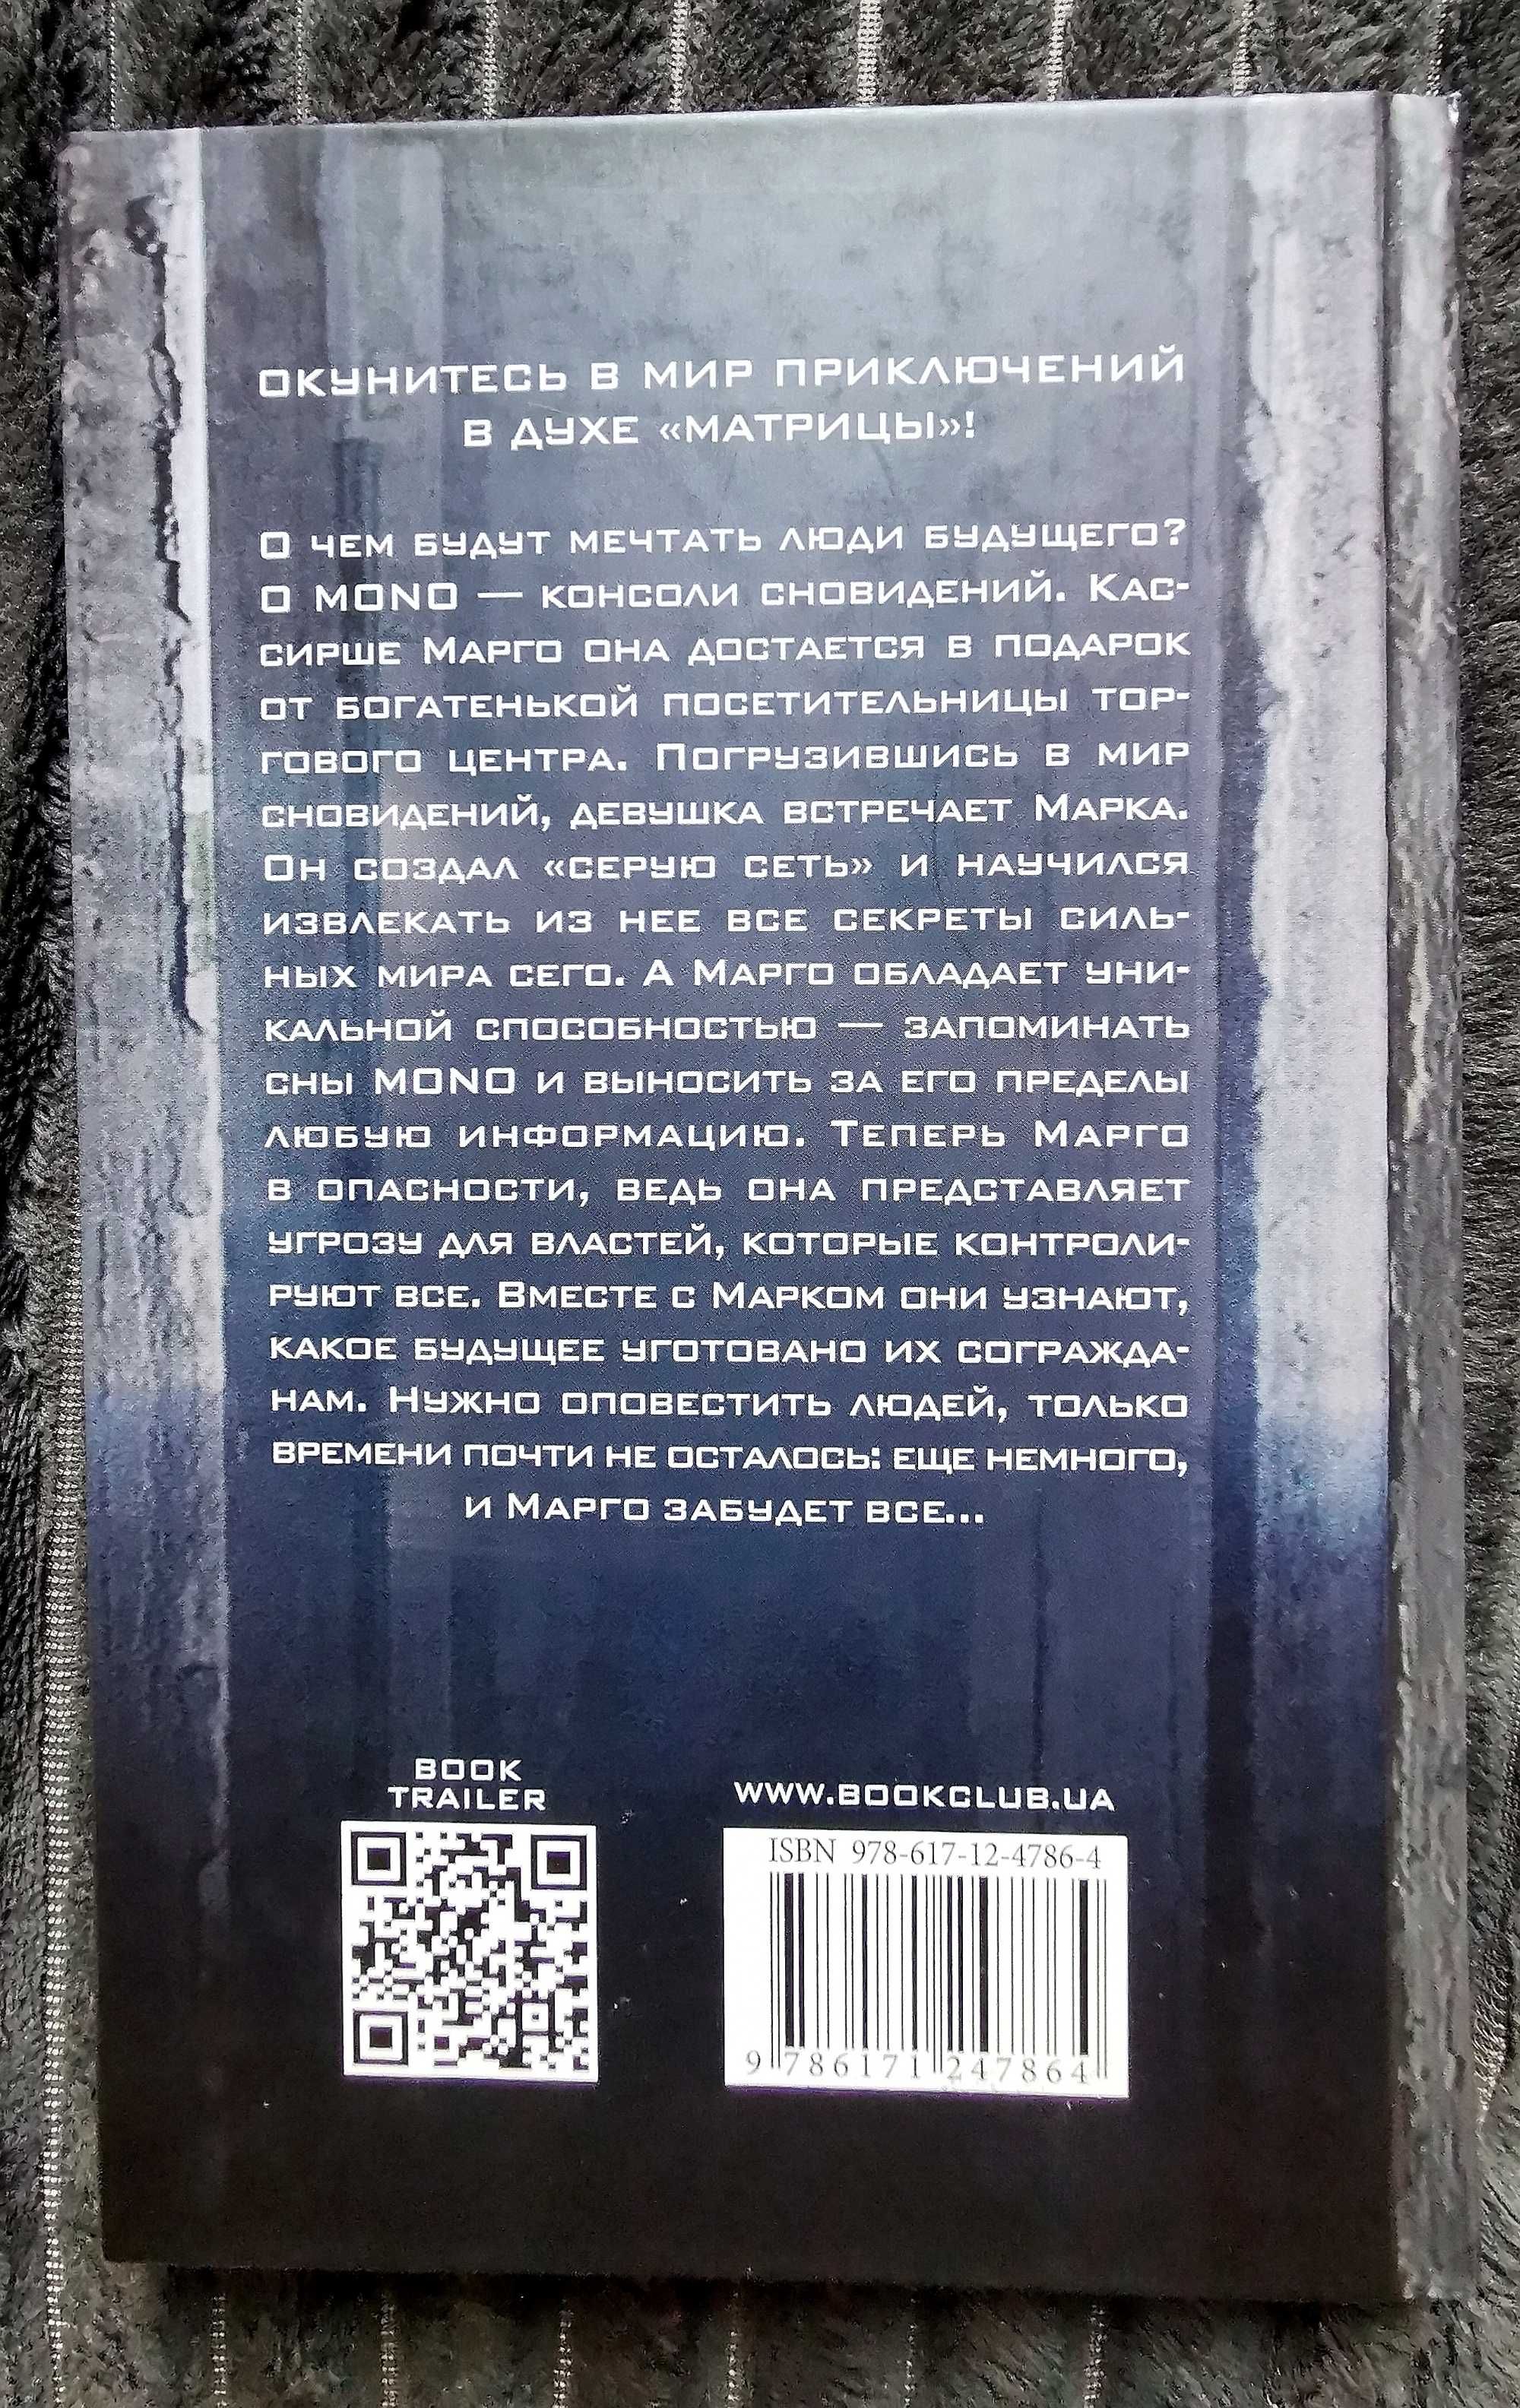 Книга Юлиан Улыбин "Mono"